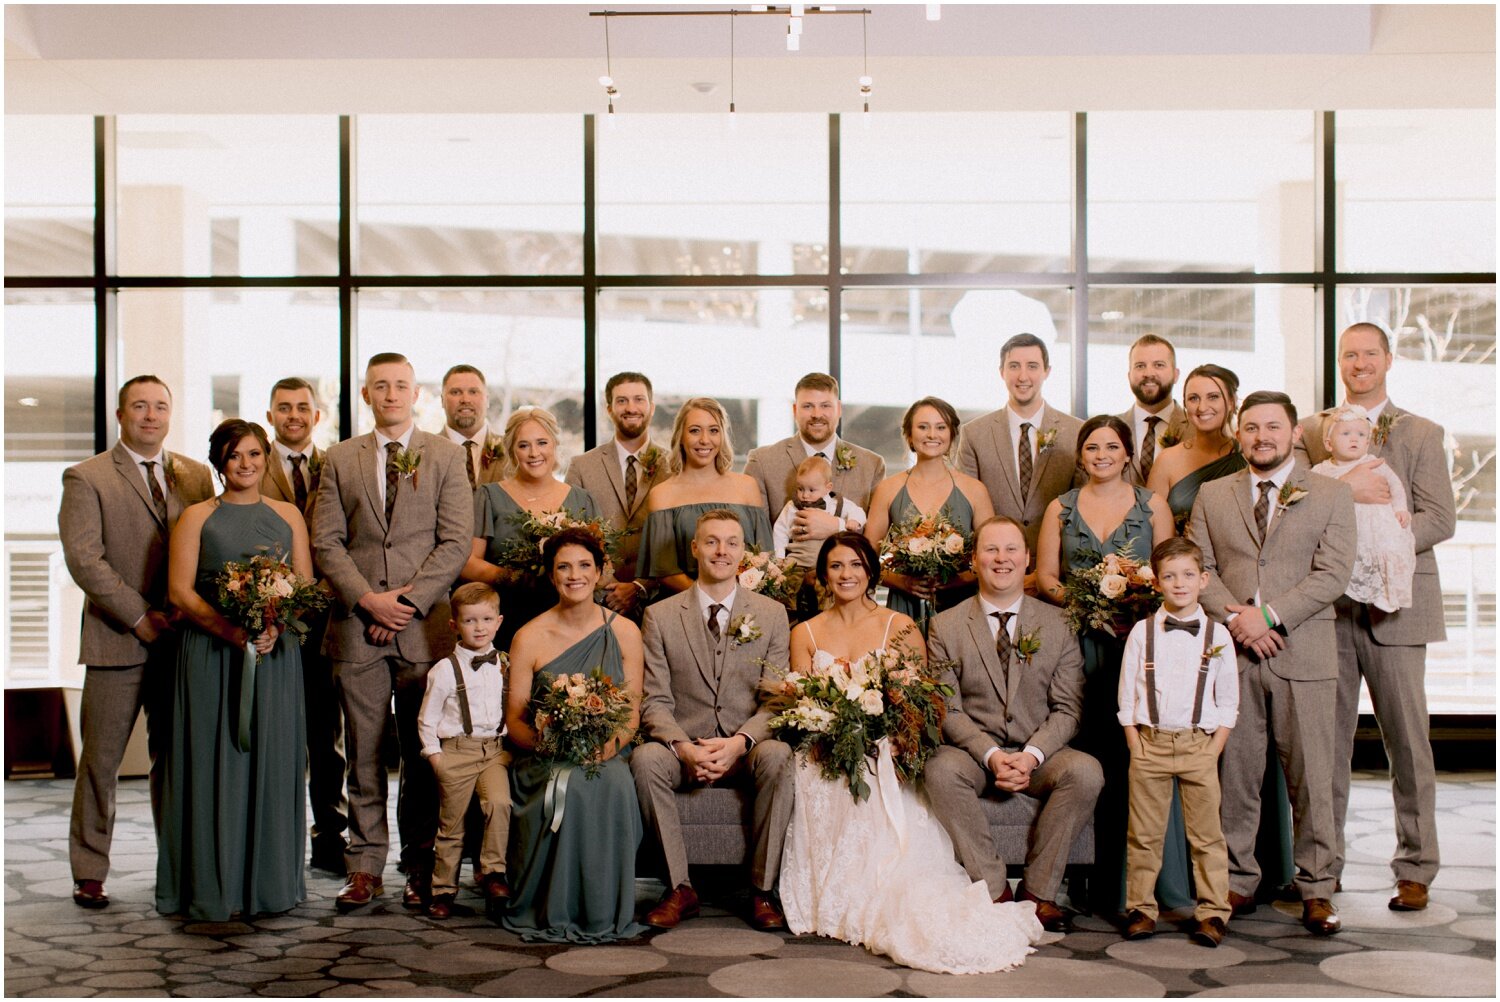 Andrew Ferren Photography - Des Moines Iowa Wedding Photographer - Destination - Engagement - Videography - Videographer - The River Center26.jpg